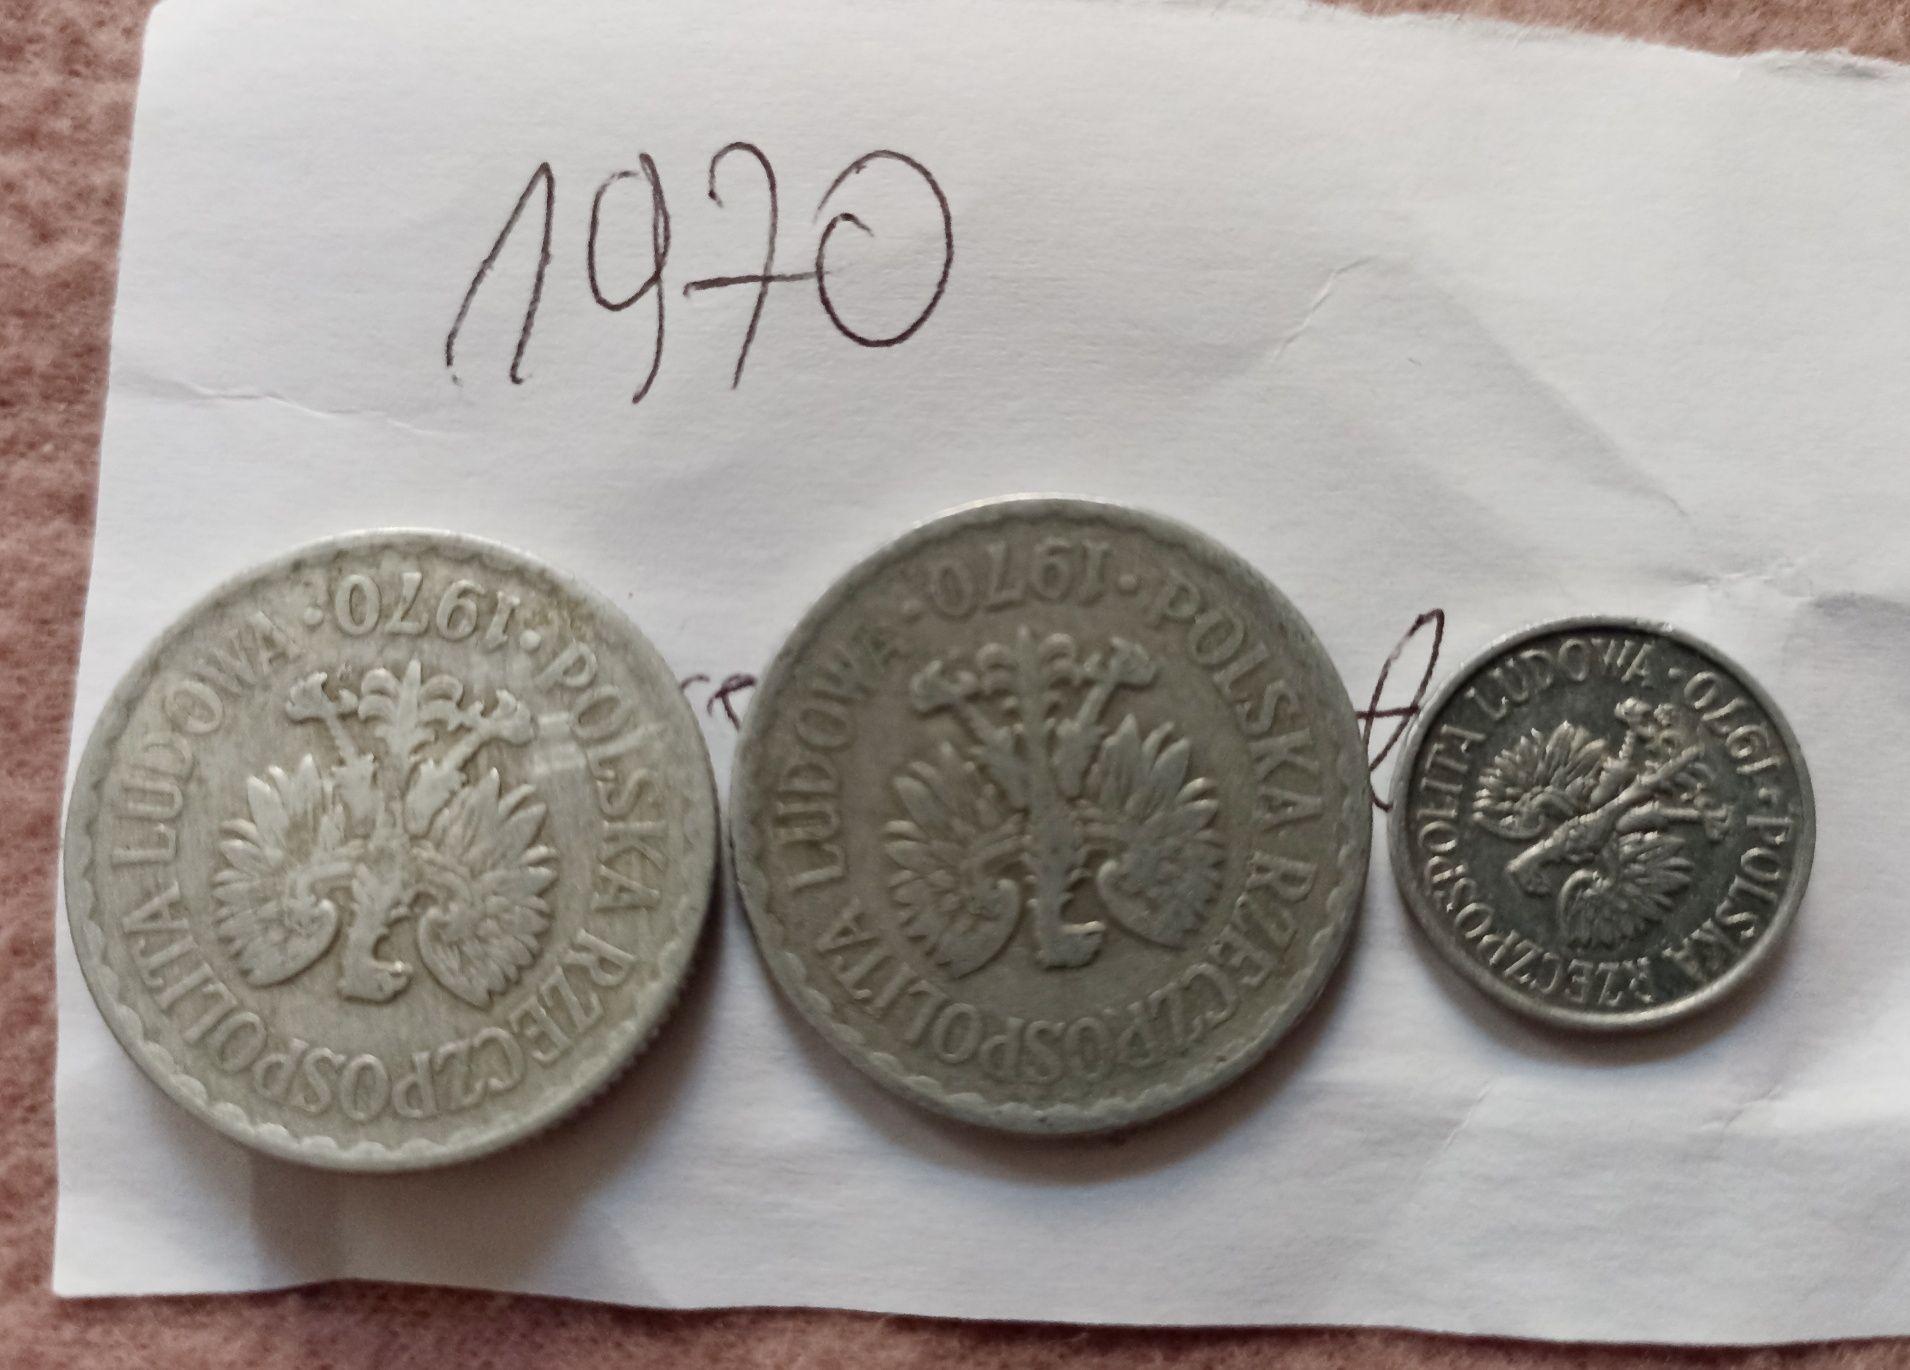 3 stare monety z 1970 roku